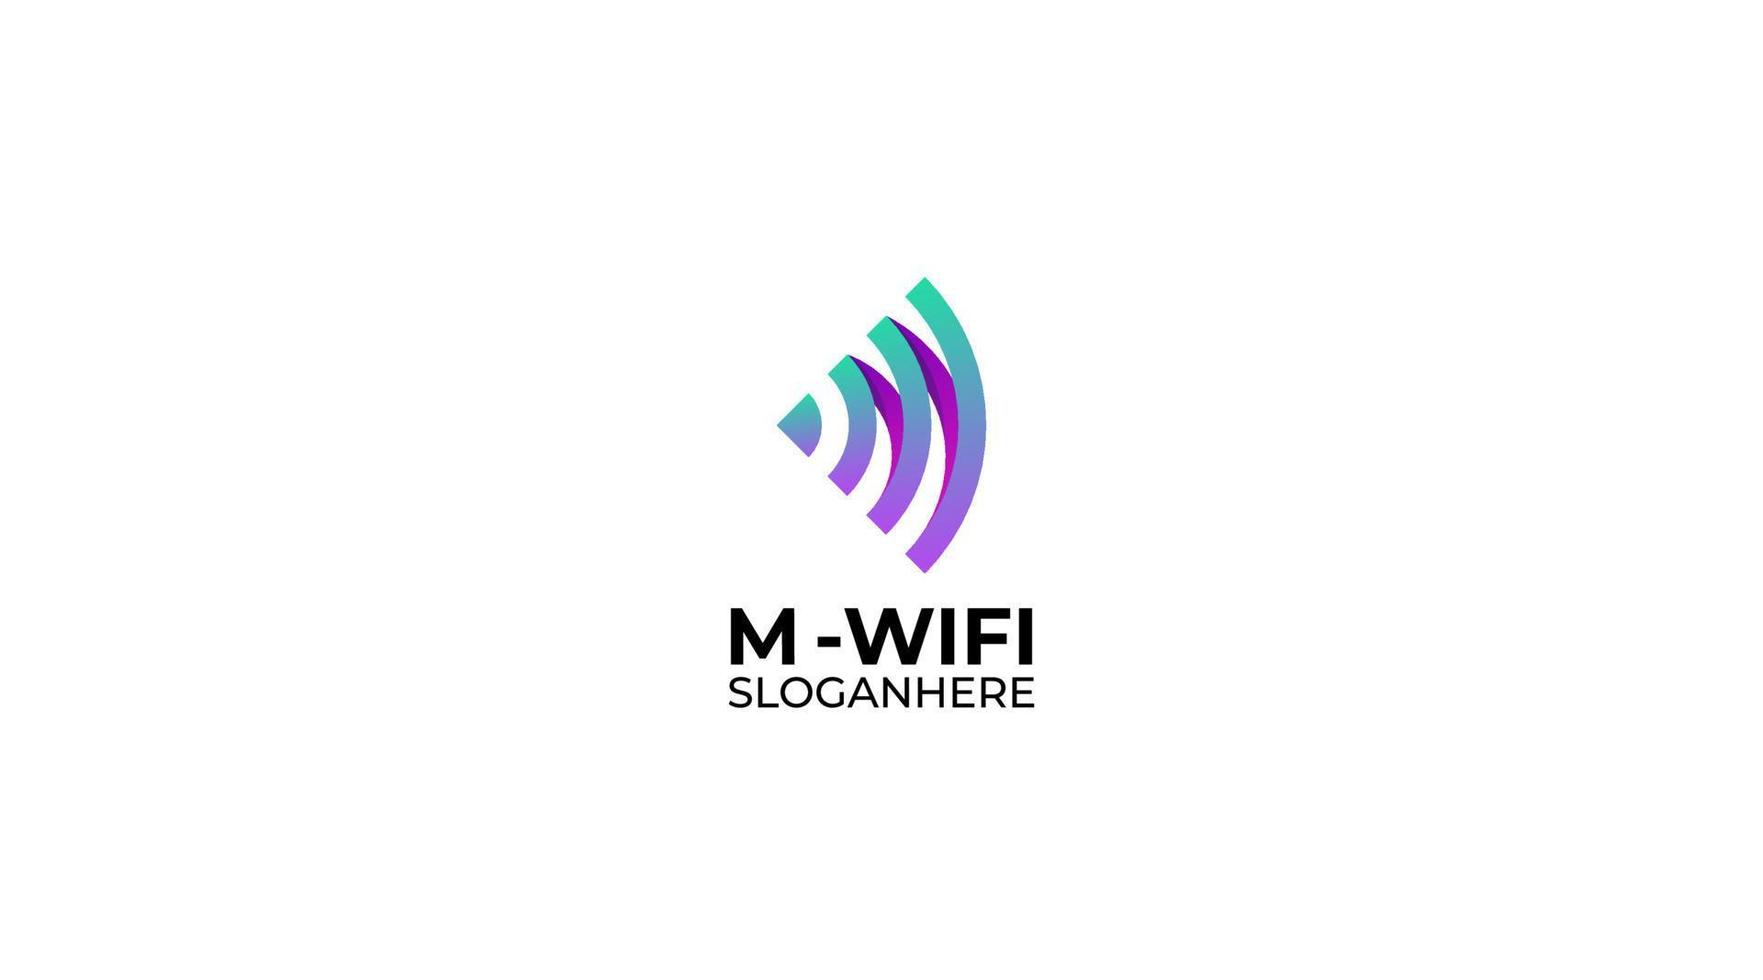 Letter M wireless logo icon design template elements vector